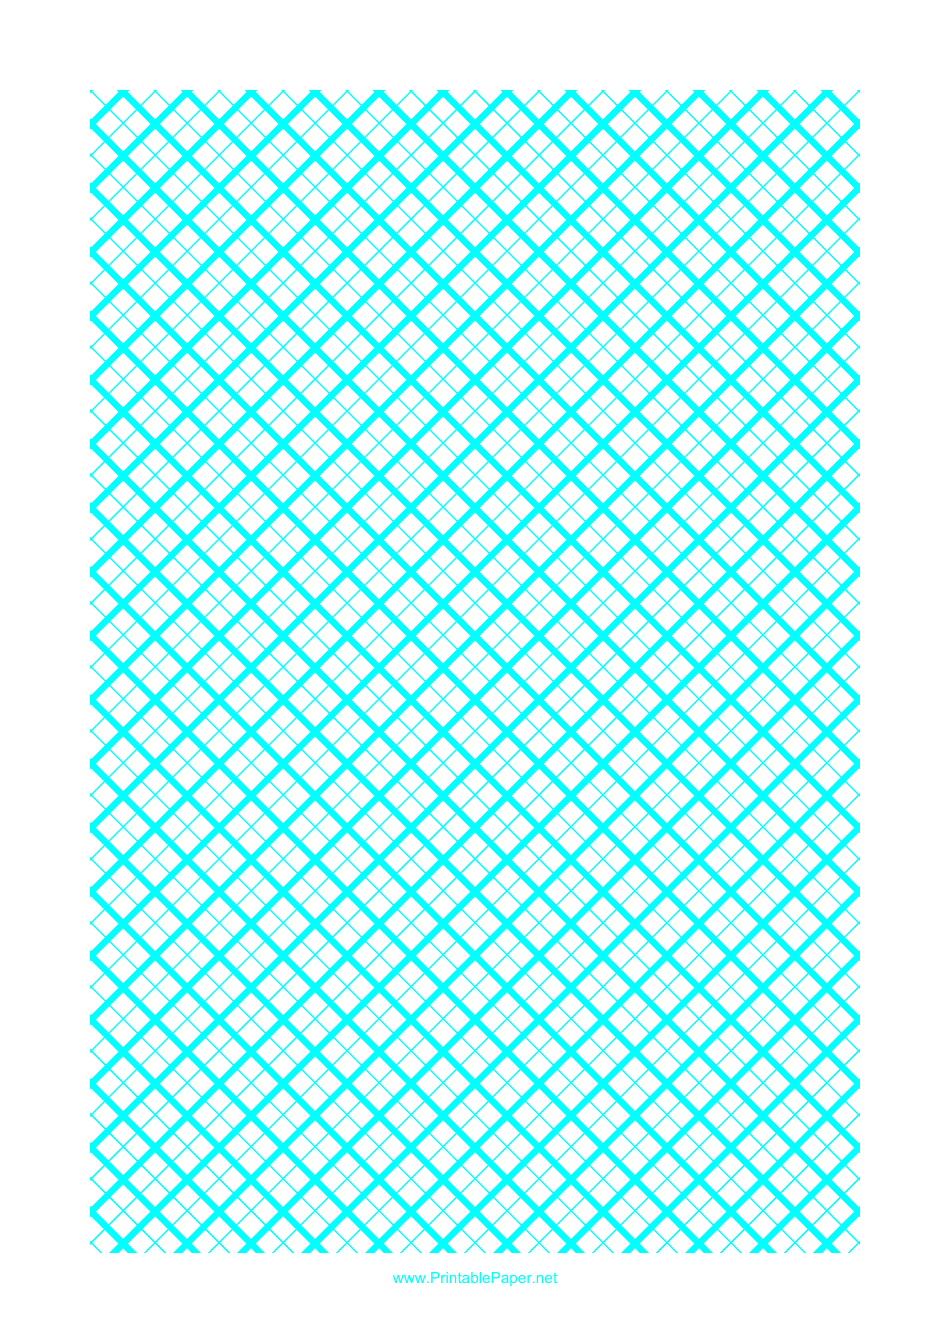 Cyan 1 Cm Quilt Grid Graph Paper Template - 2x2